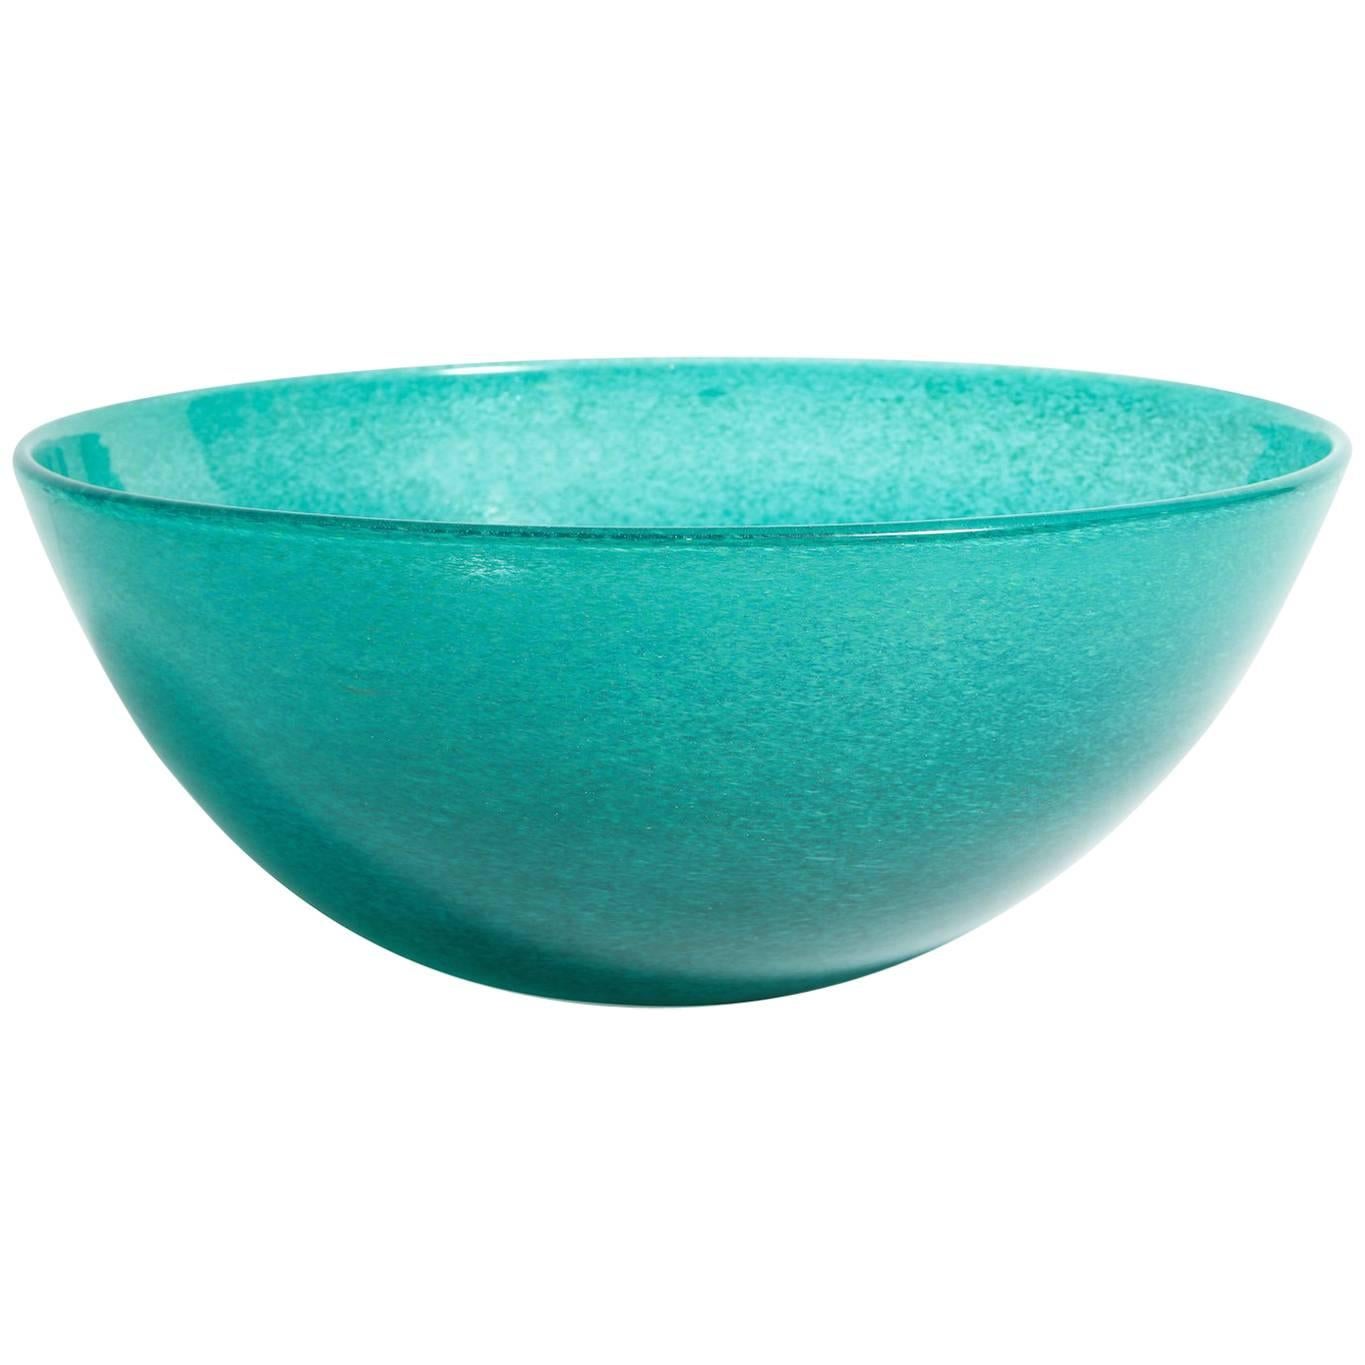 Ercole Barovier Large Bowl